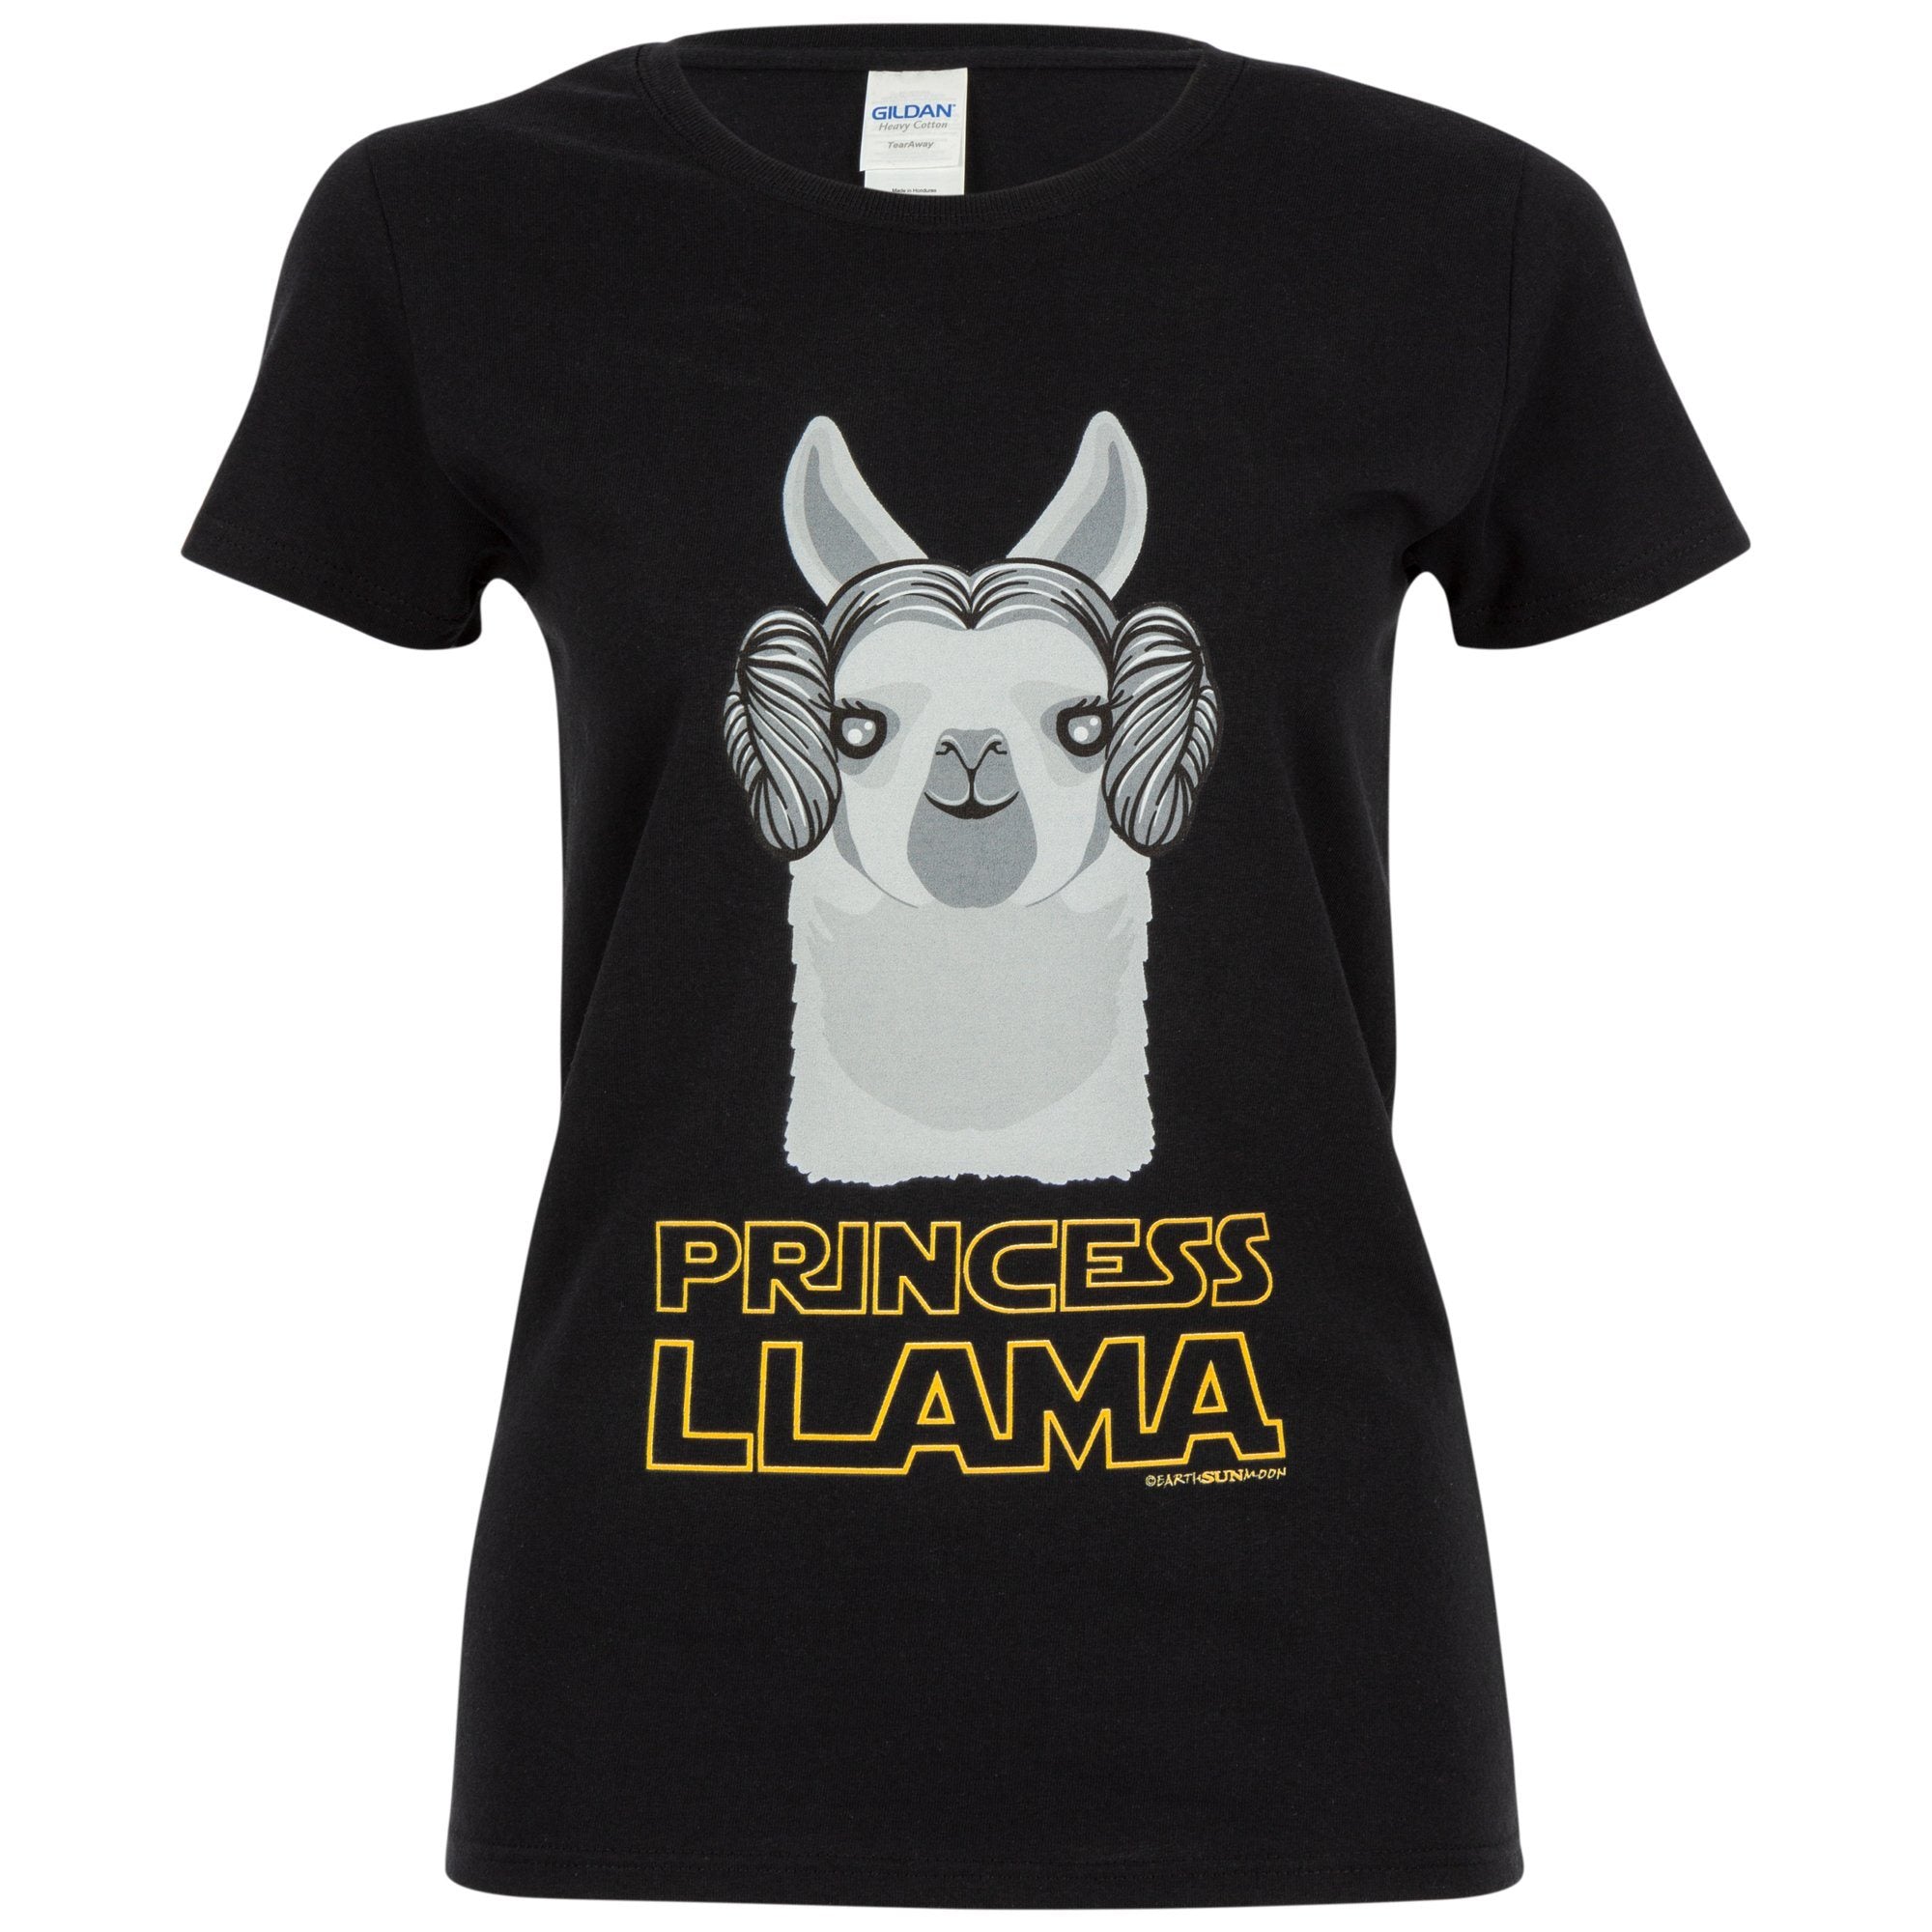 Princess Llama Tee - XL